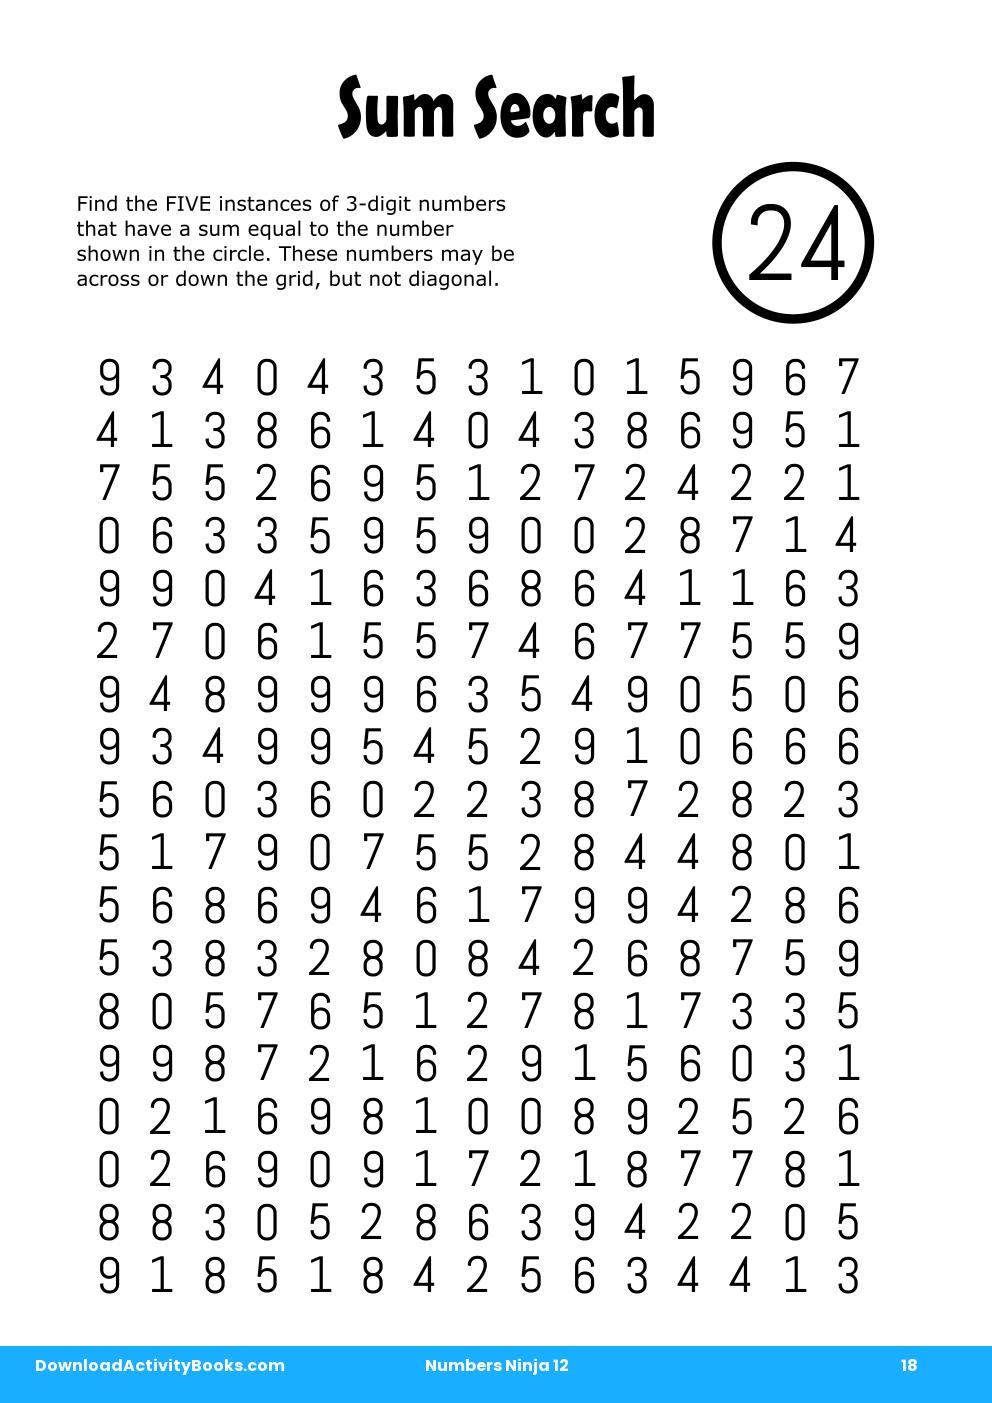 Sum Search in Numbers Ninja 12